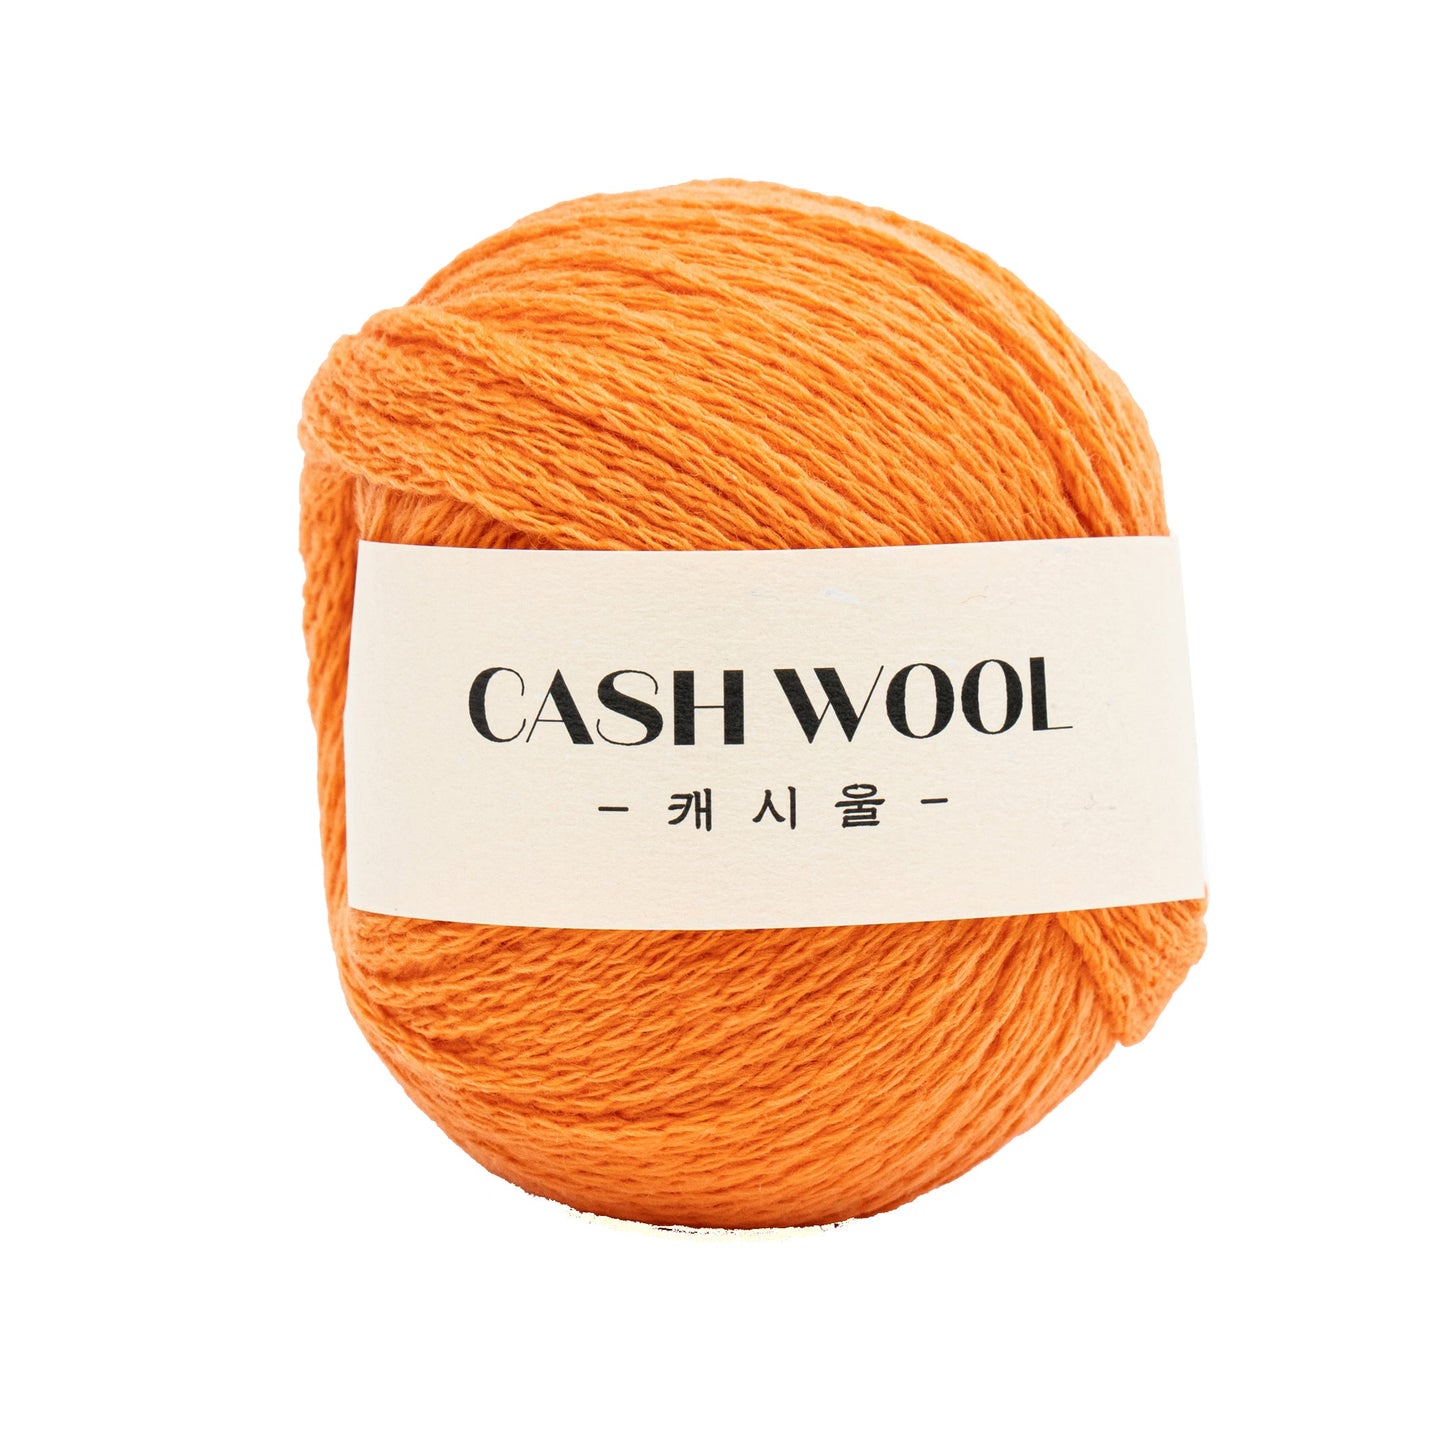 Cashwool, Cashmere Wool Nylon Mixed Yarn, Pretty Colors - Orange